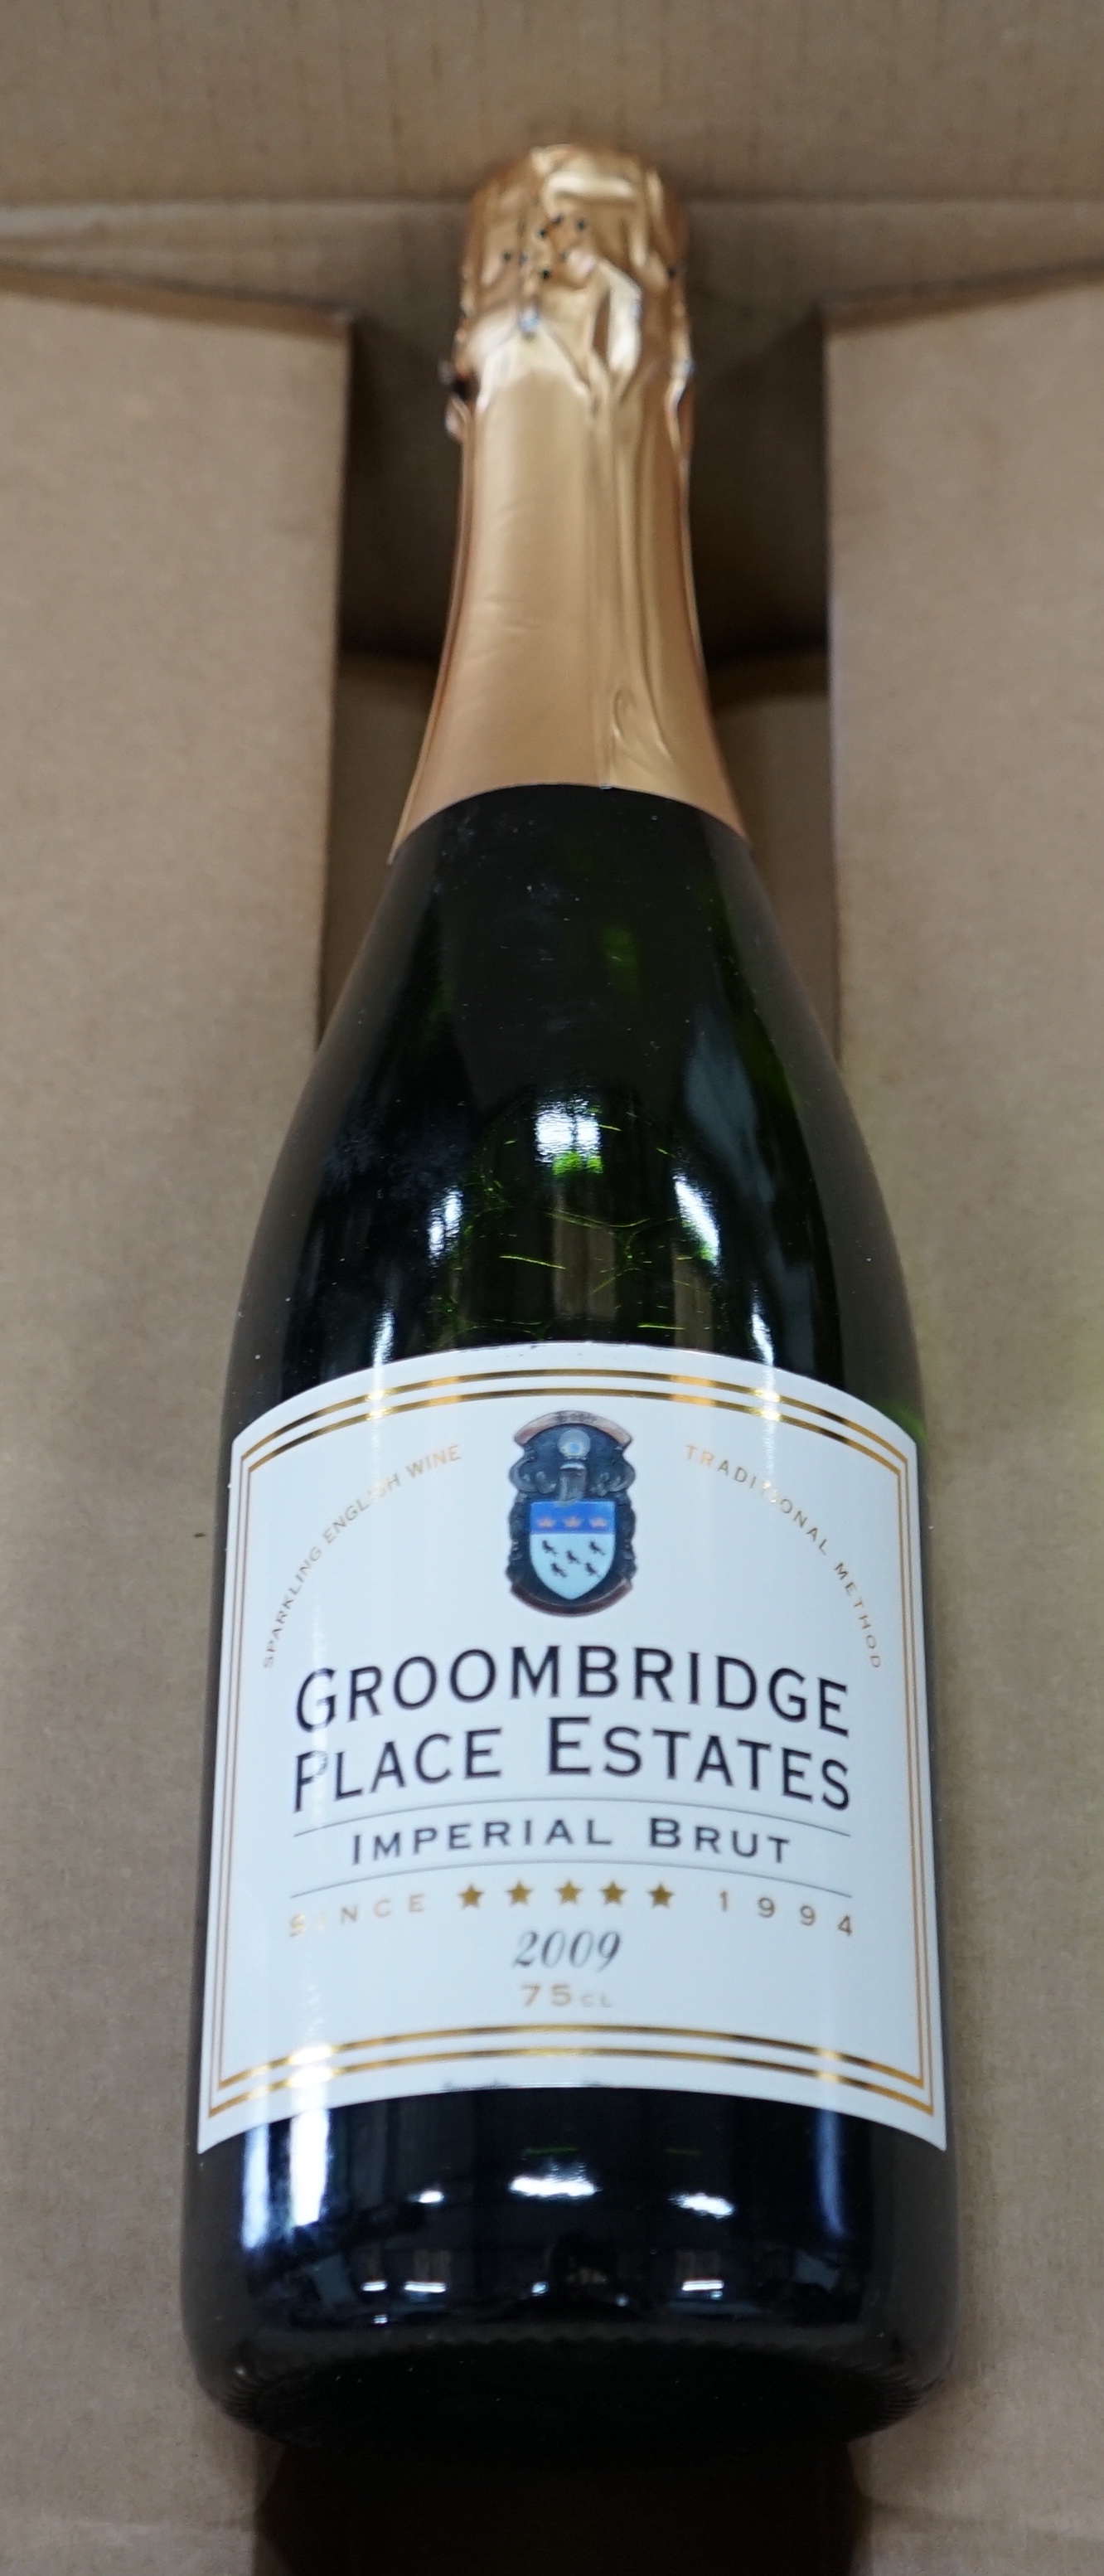 Twelve bottles of Groombridge Place Estate Imperial Brut 2009 English sparkling wine